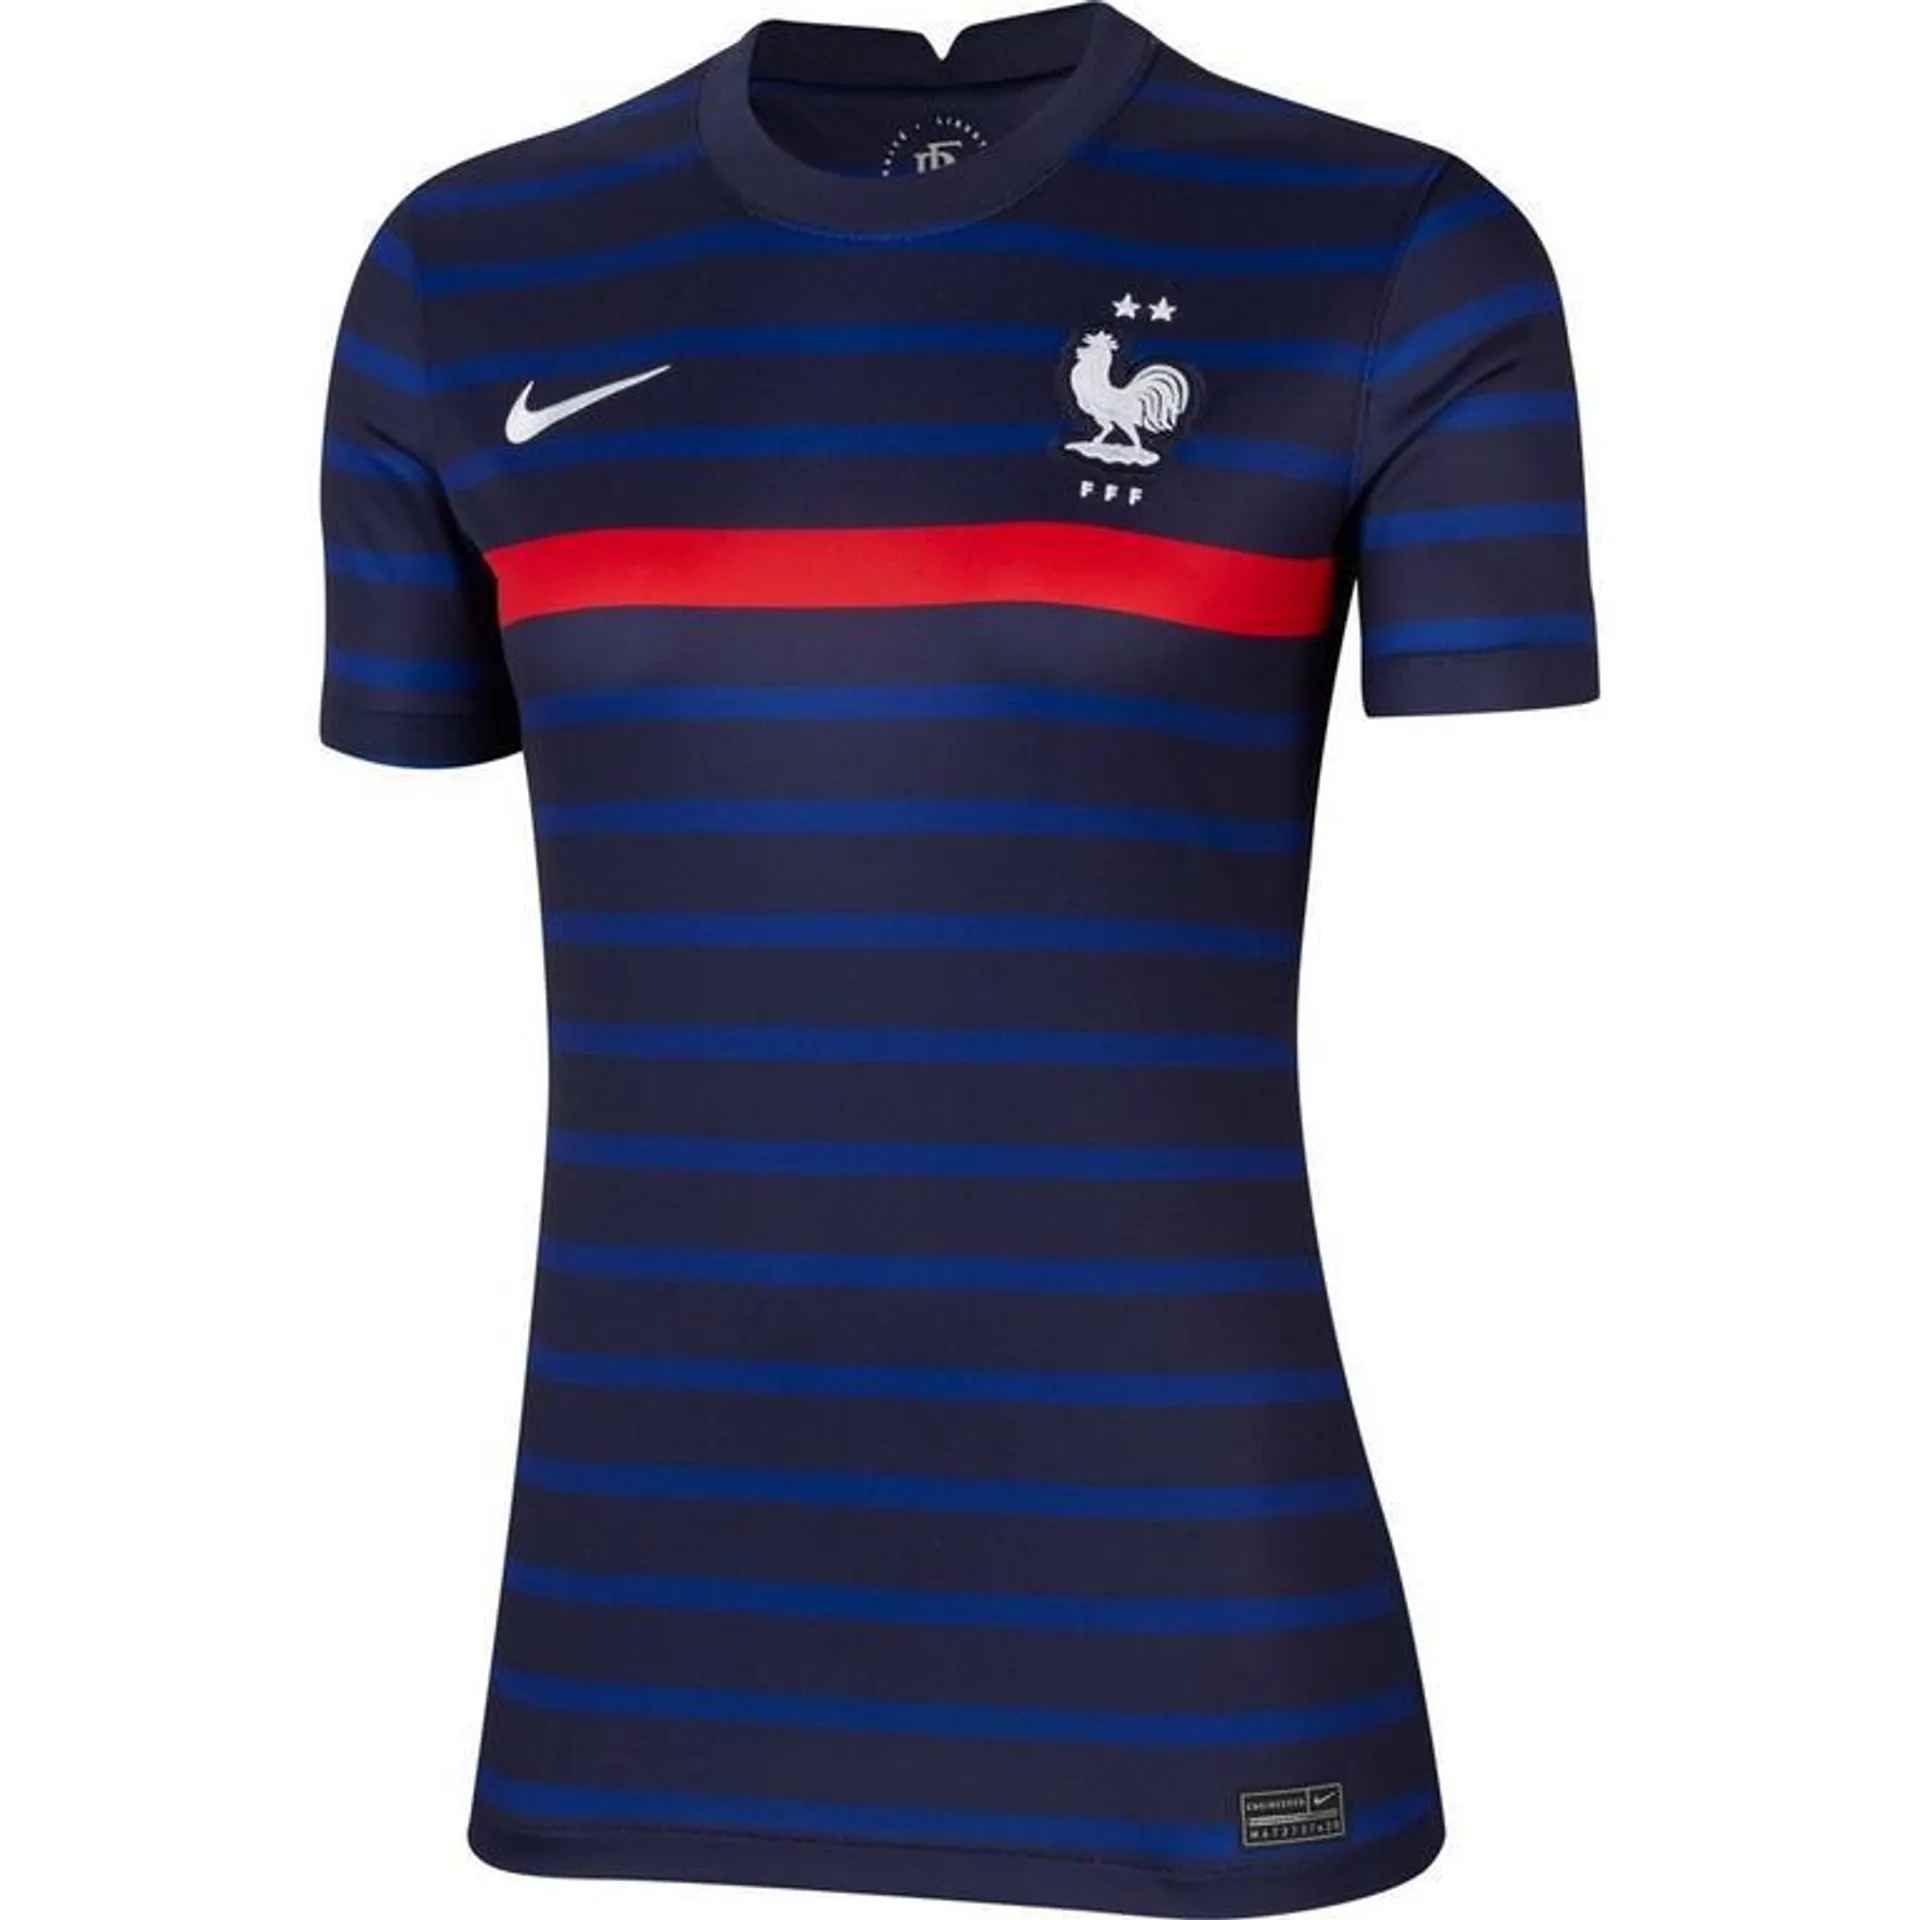 France Home Shirt 2020 Ladies